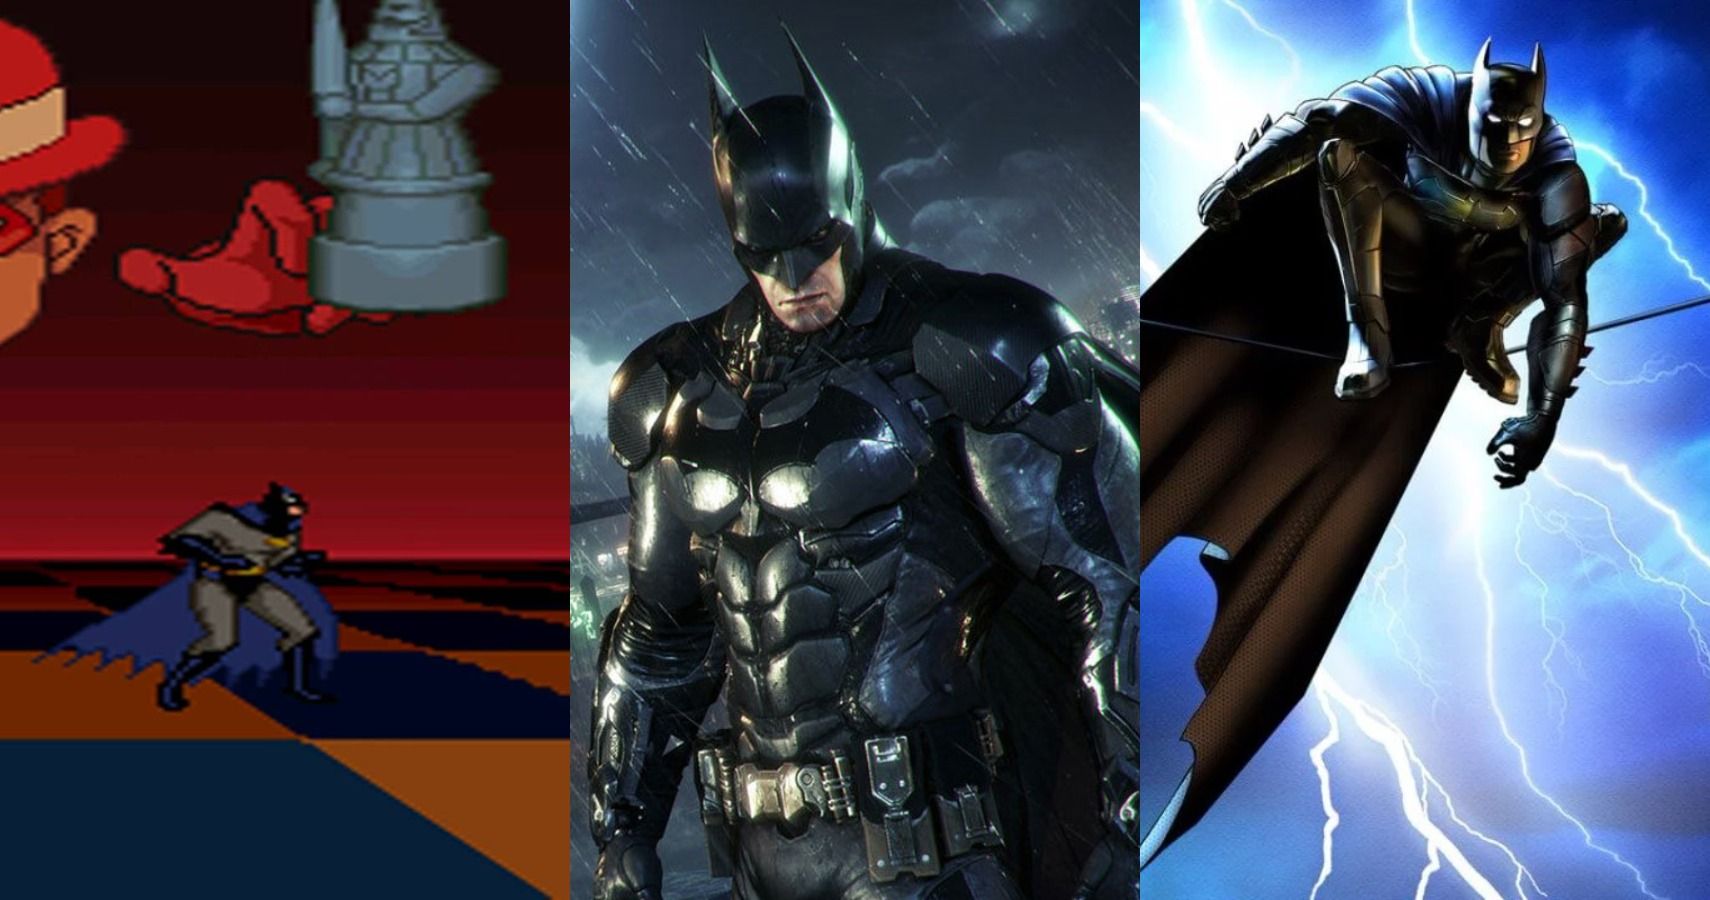 10 Best Batman Video Games That Arent ArkhamRelated Ranked